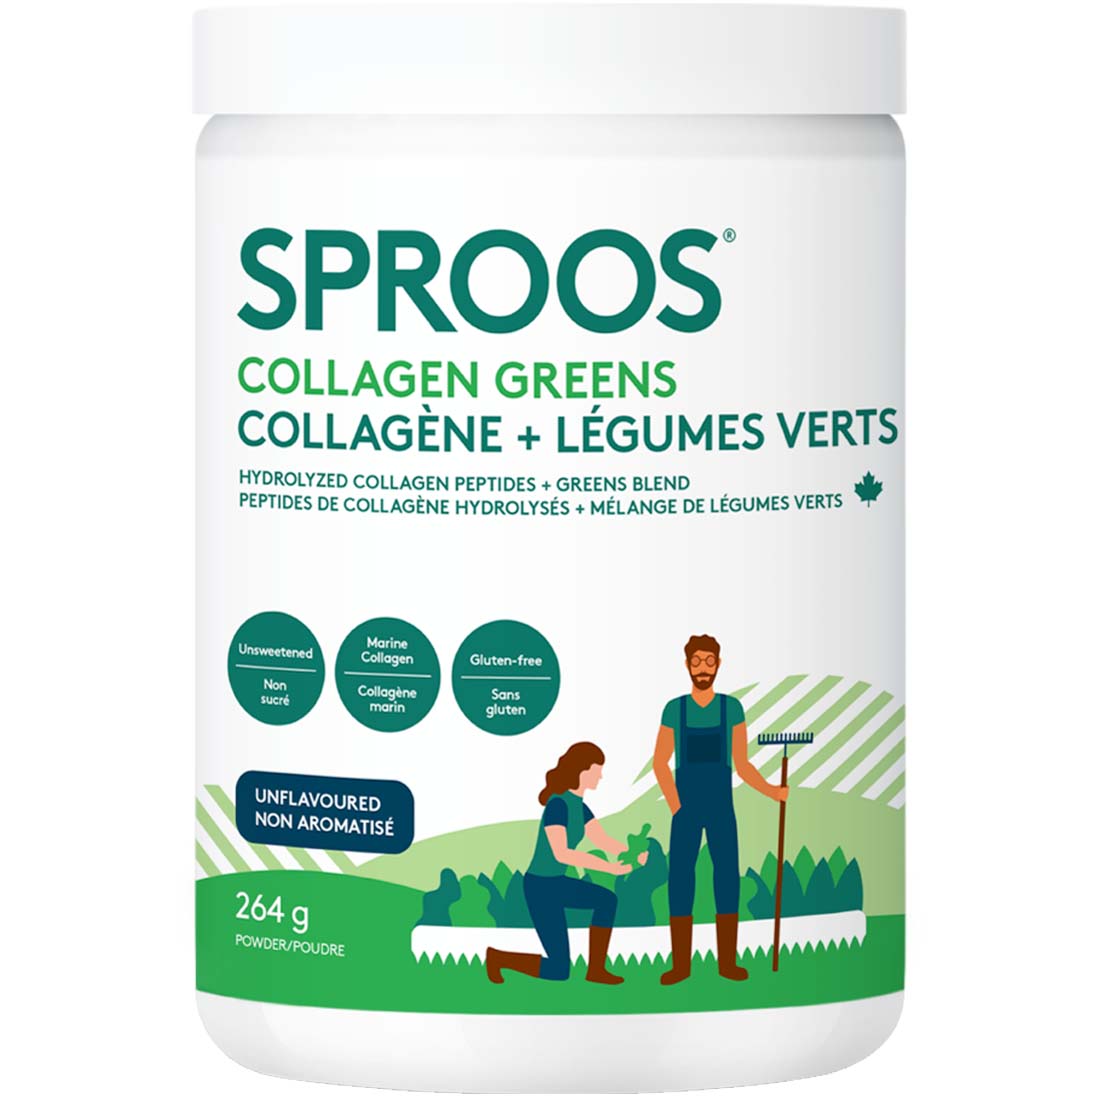 Sproos Collagen Greens, 264g